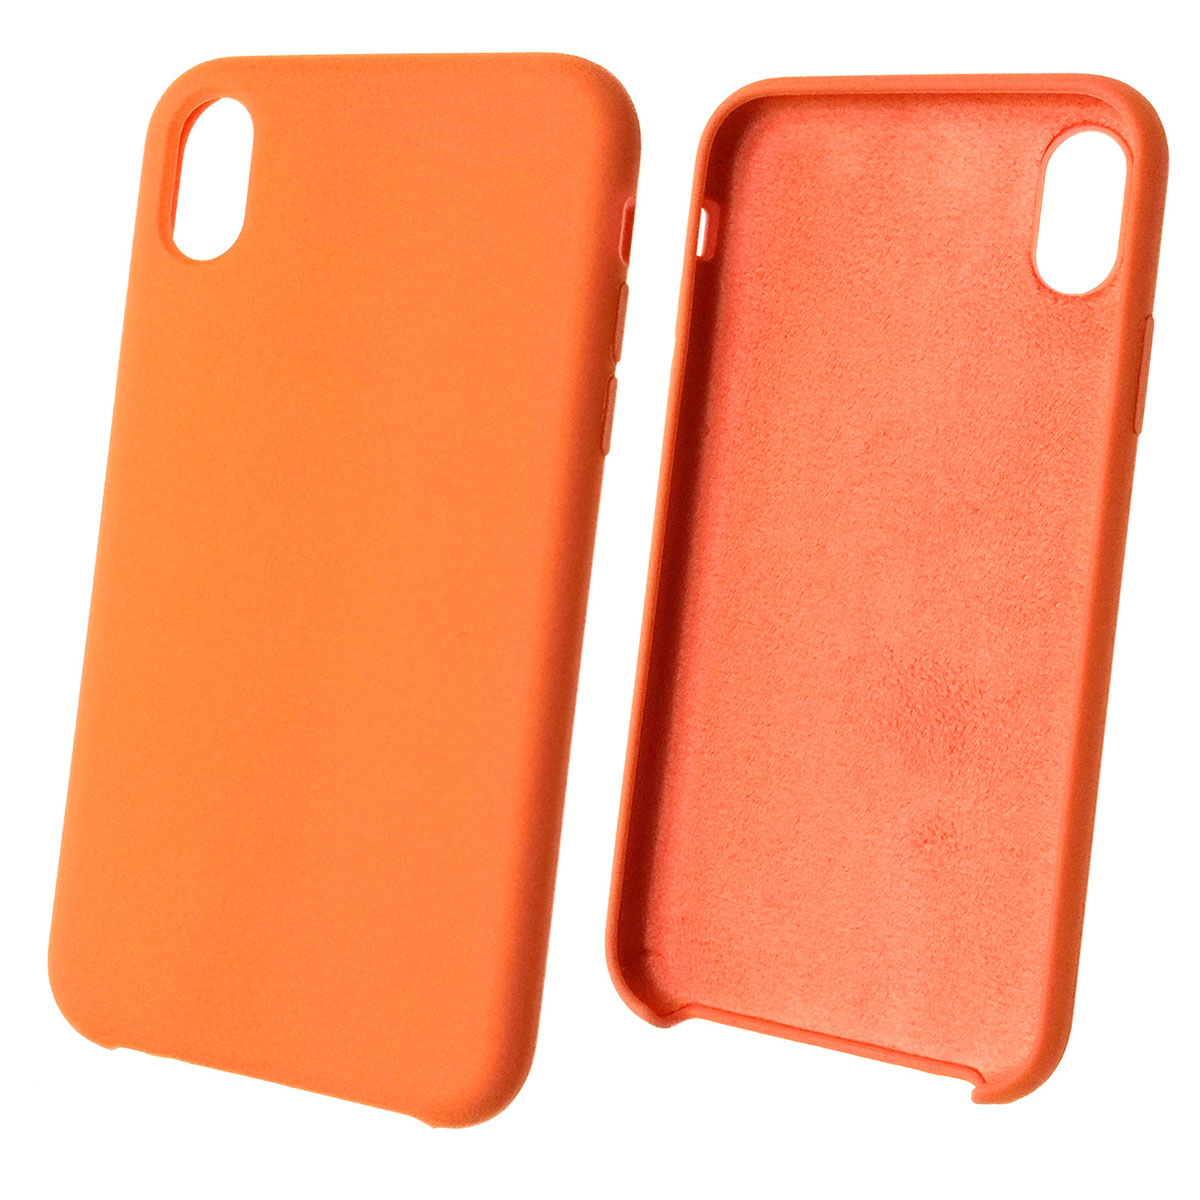 Чехол накладка Silicon Case для APPLE iPhone XR, силикон, бархат, цвет оранжевый.